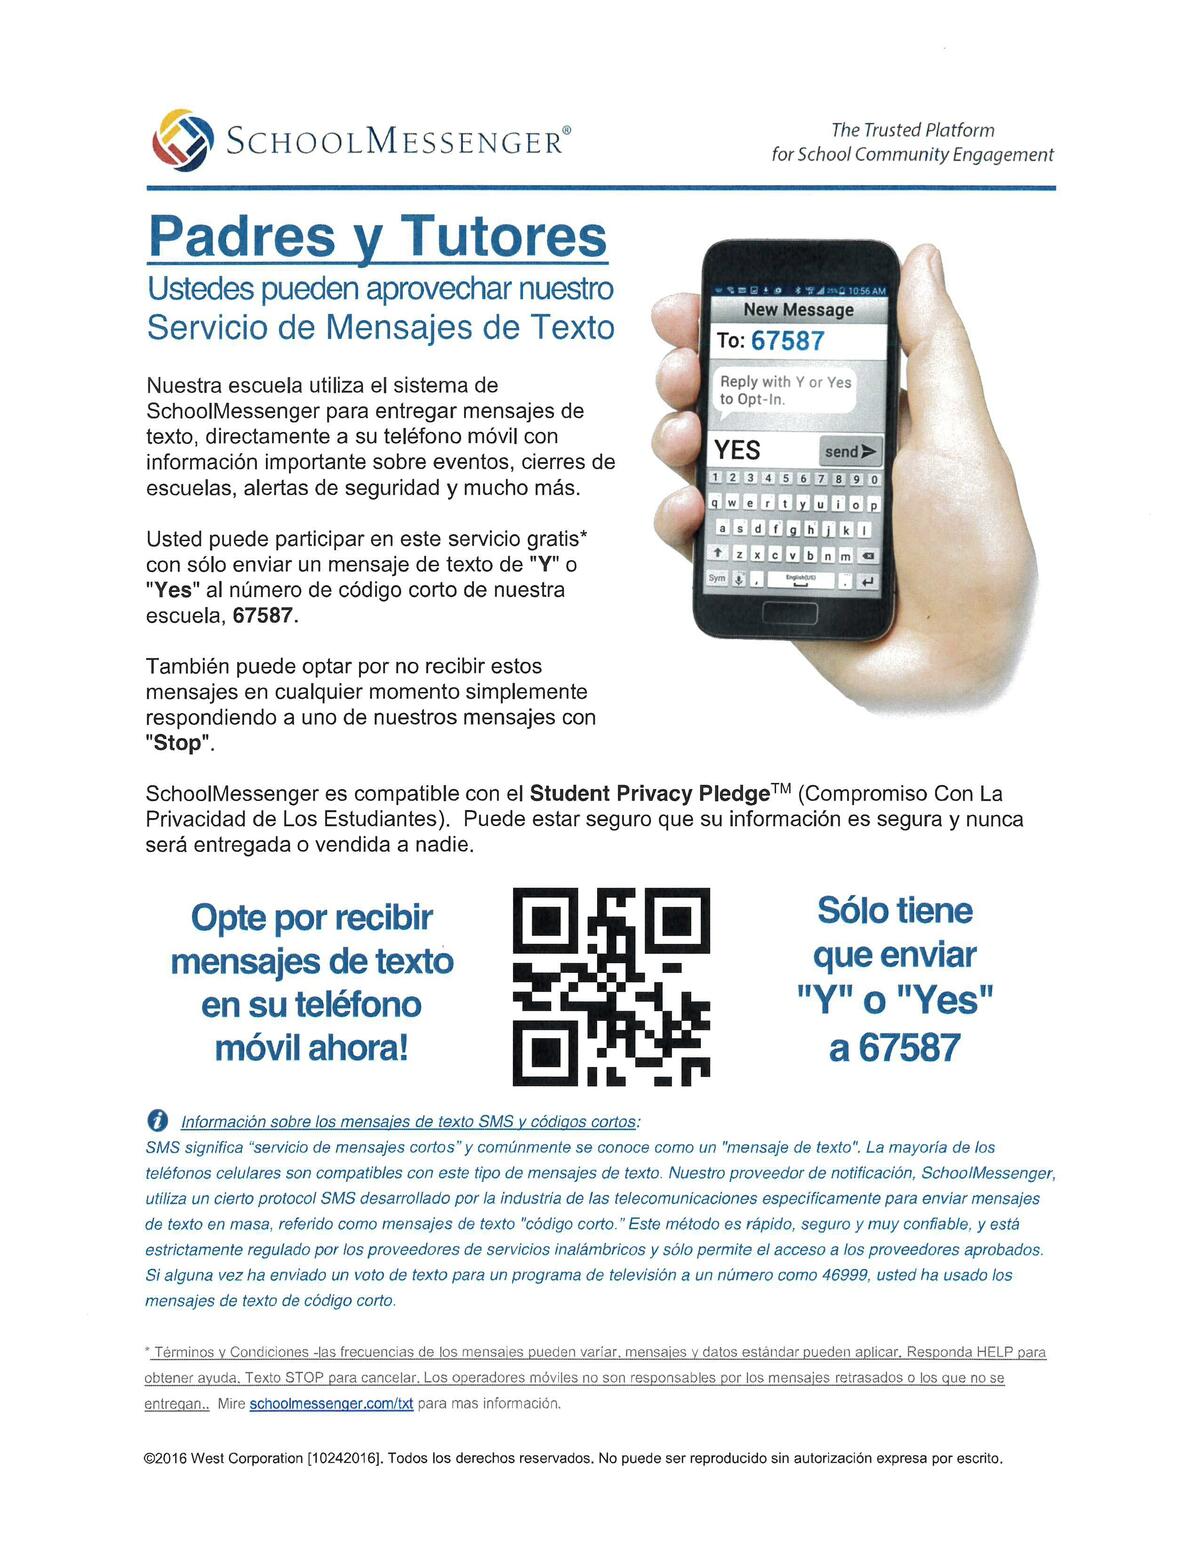 JPG in spanish of the school messenger sign up info